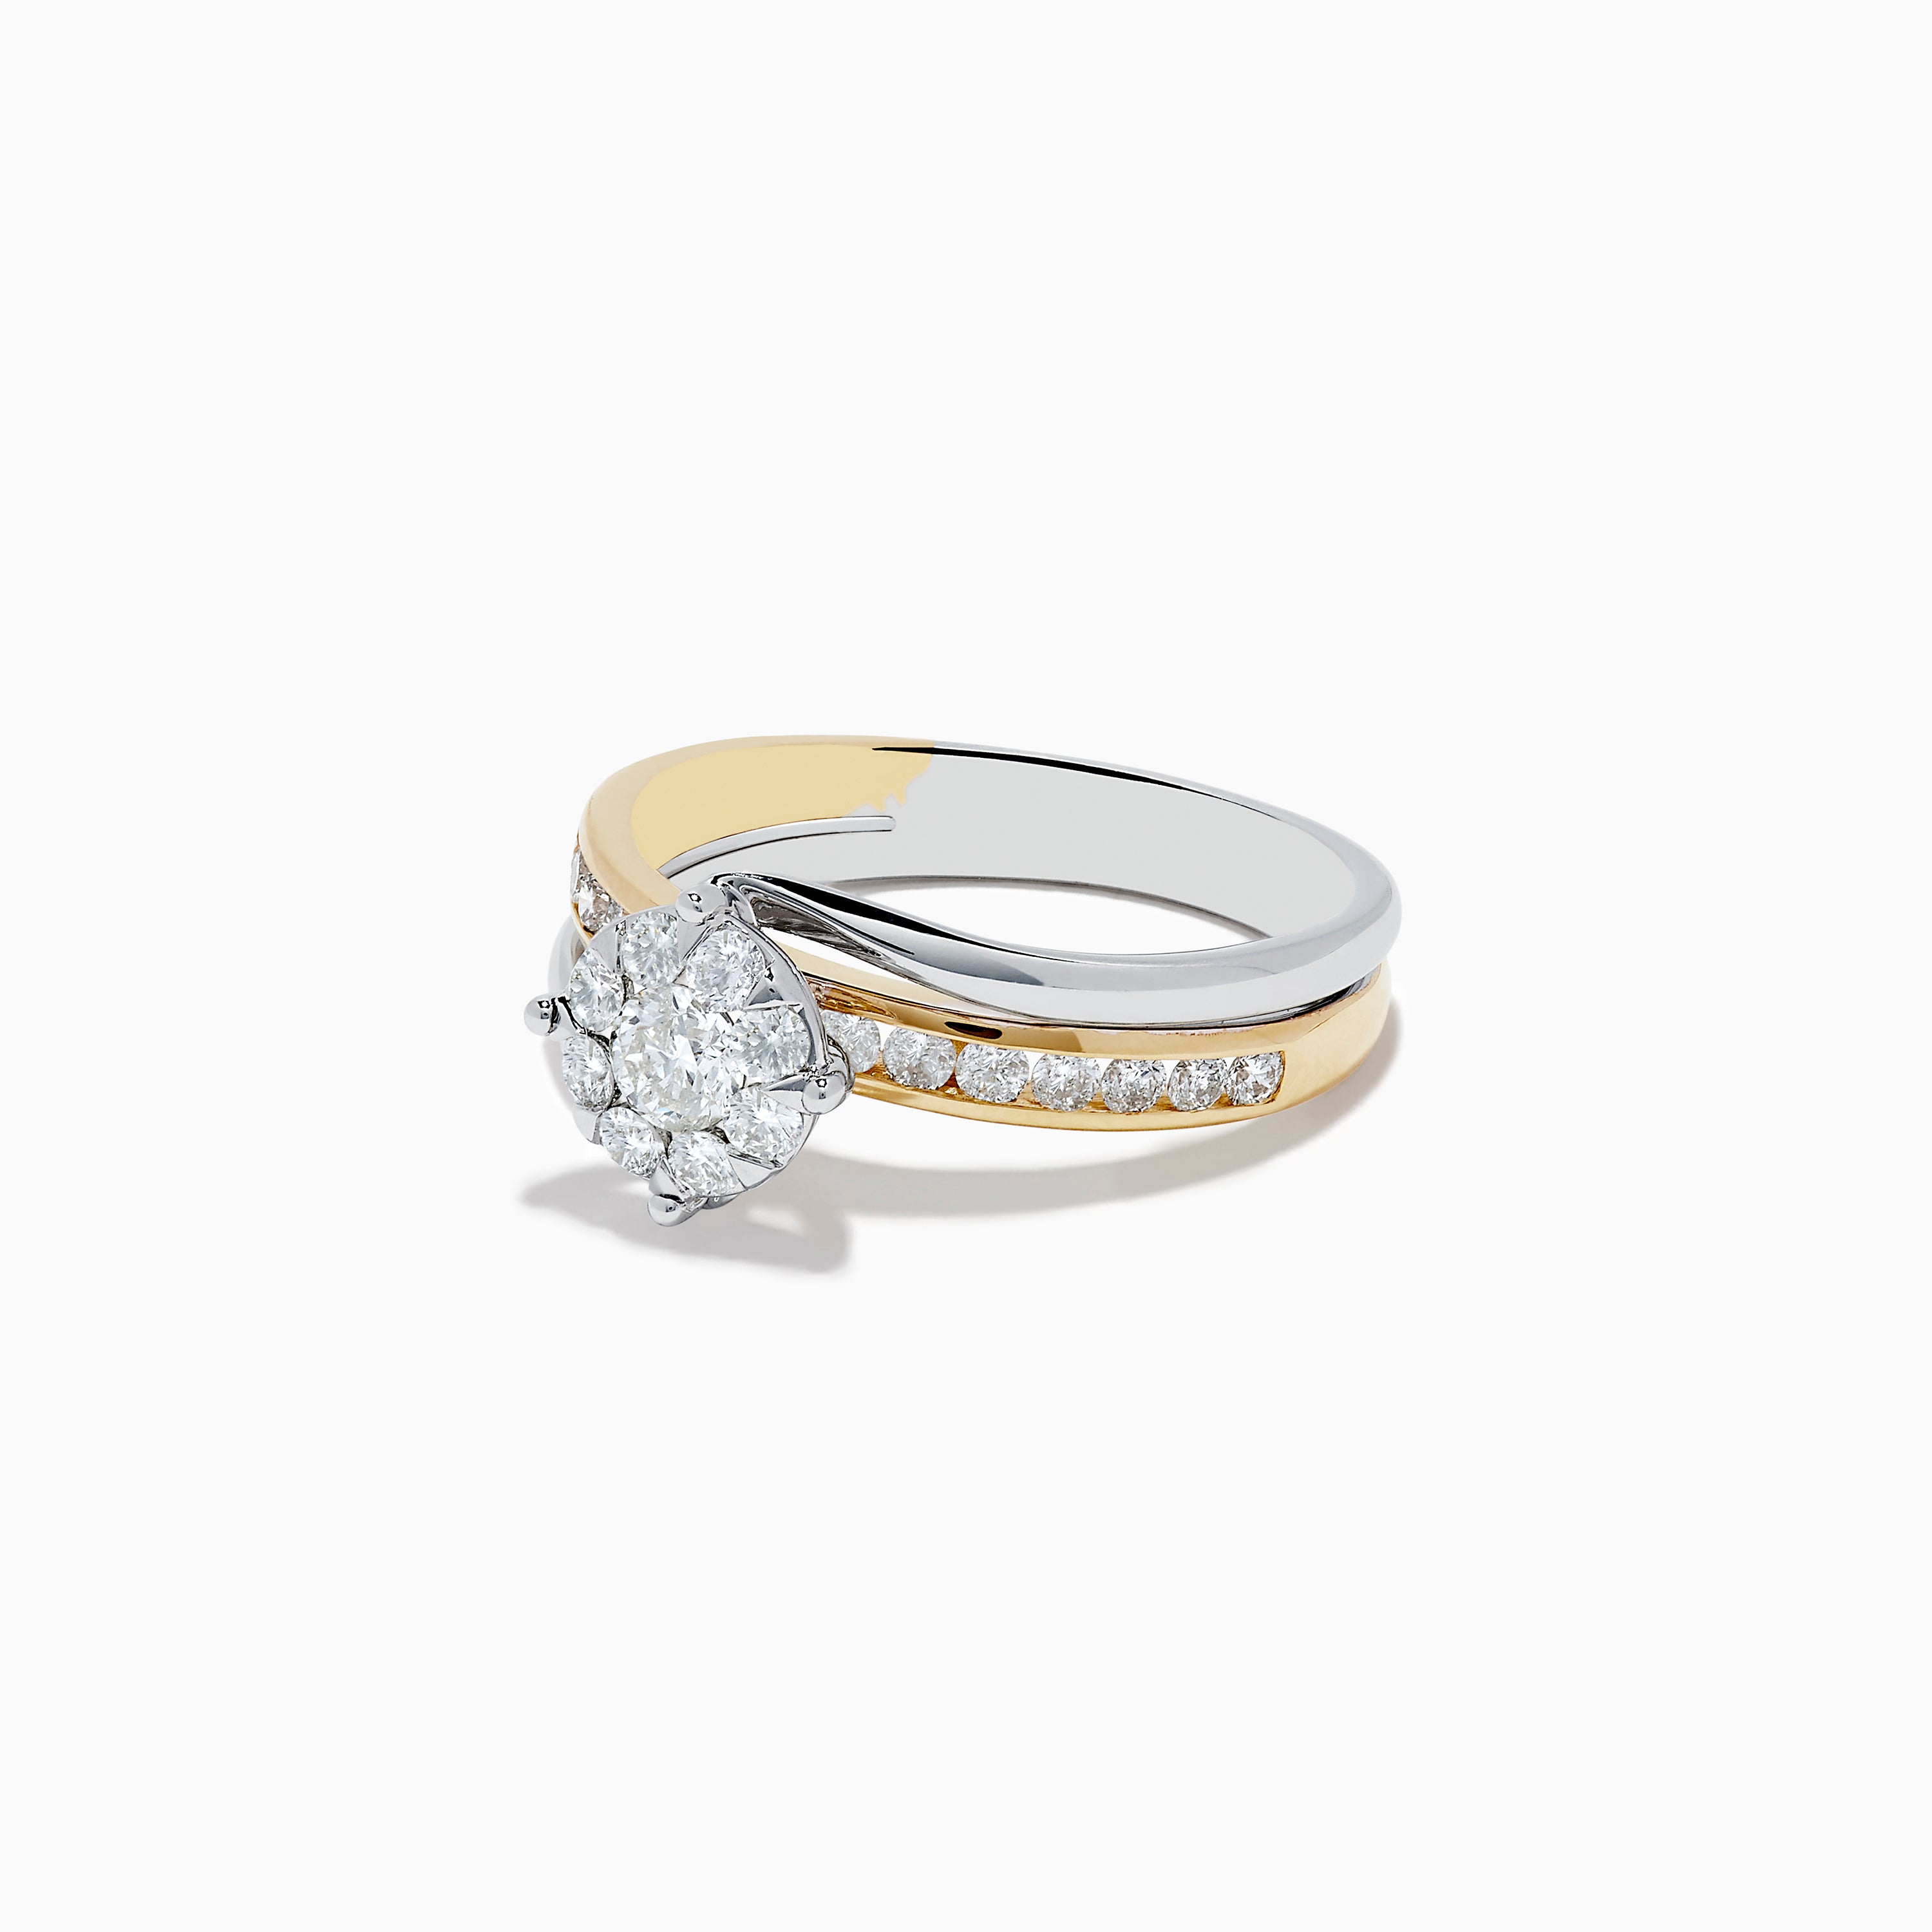 Effy Duo 14K Two-Tone Gold Diamond Ring